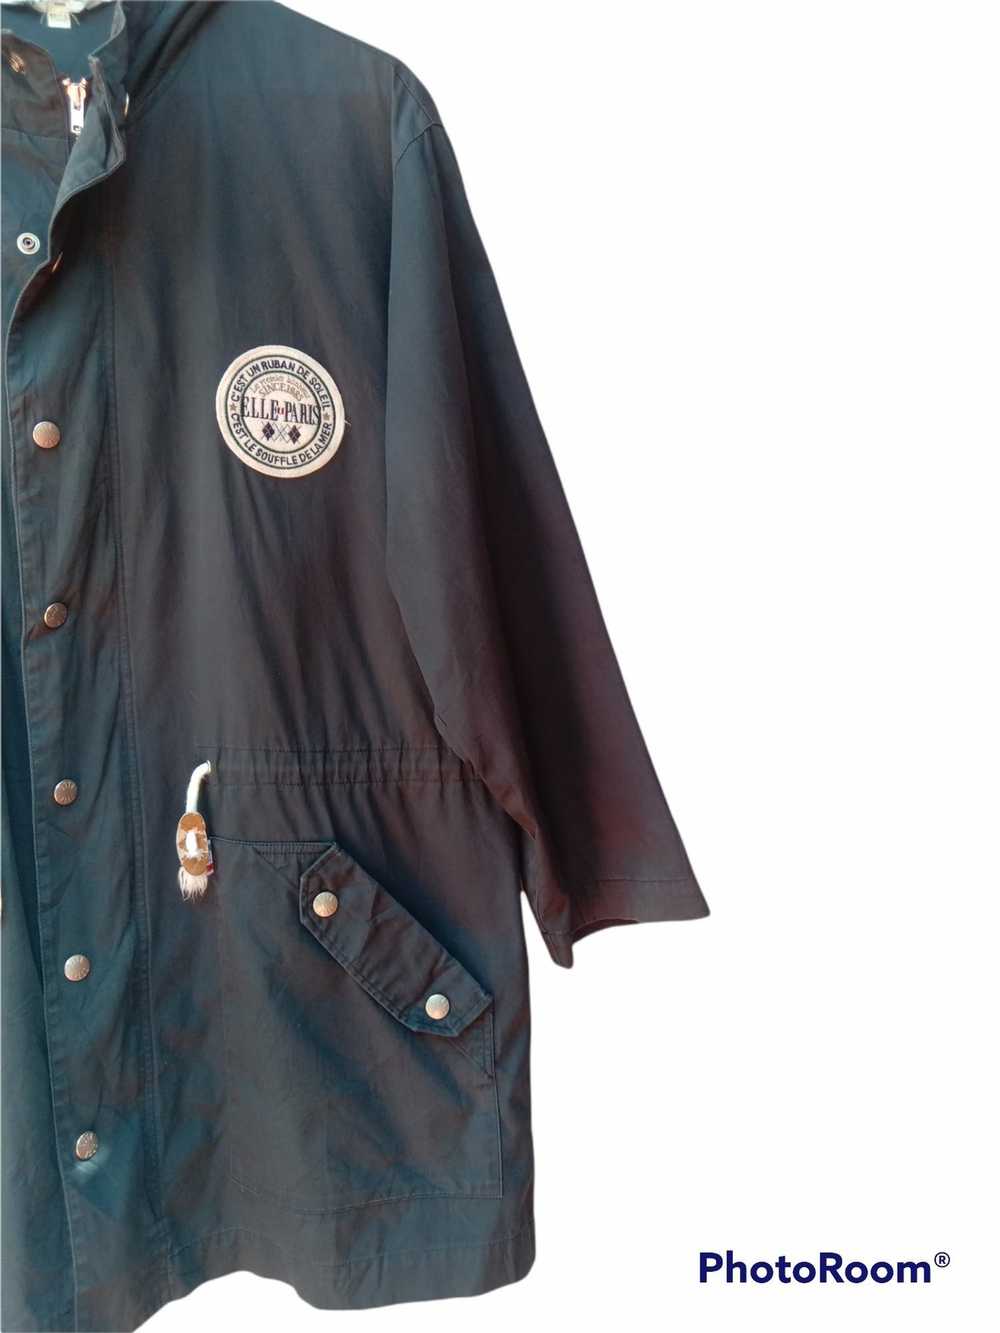 Other × Vintage Vintage Elle Paris zipper jacket - image 2